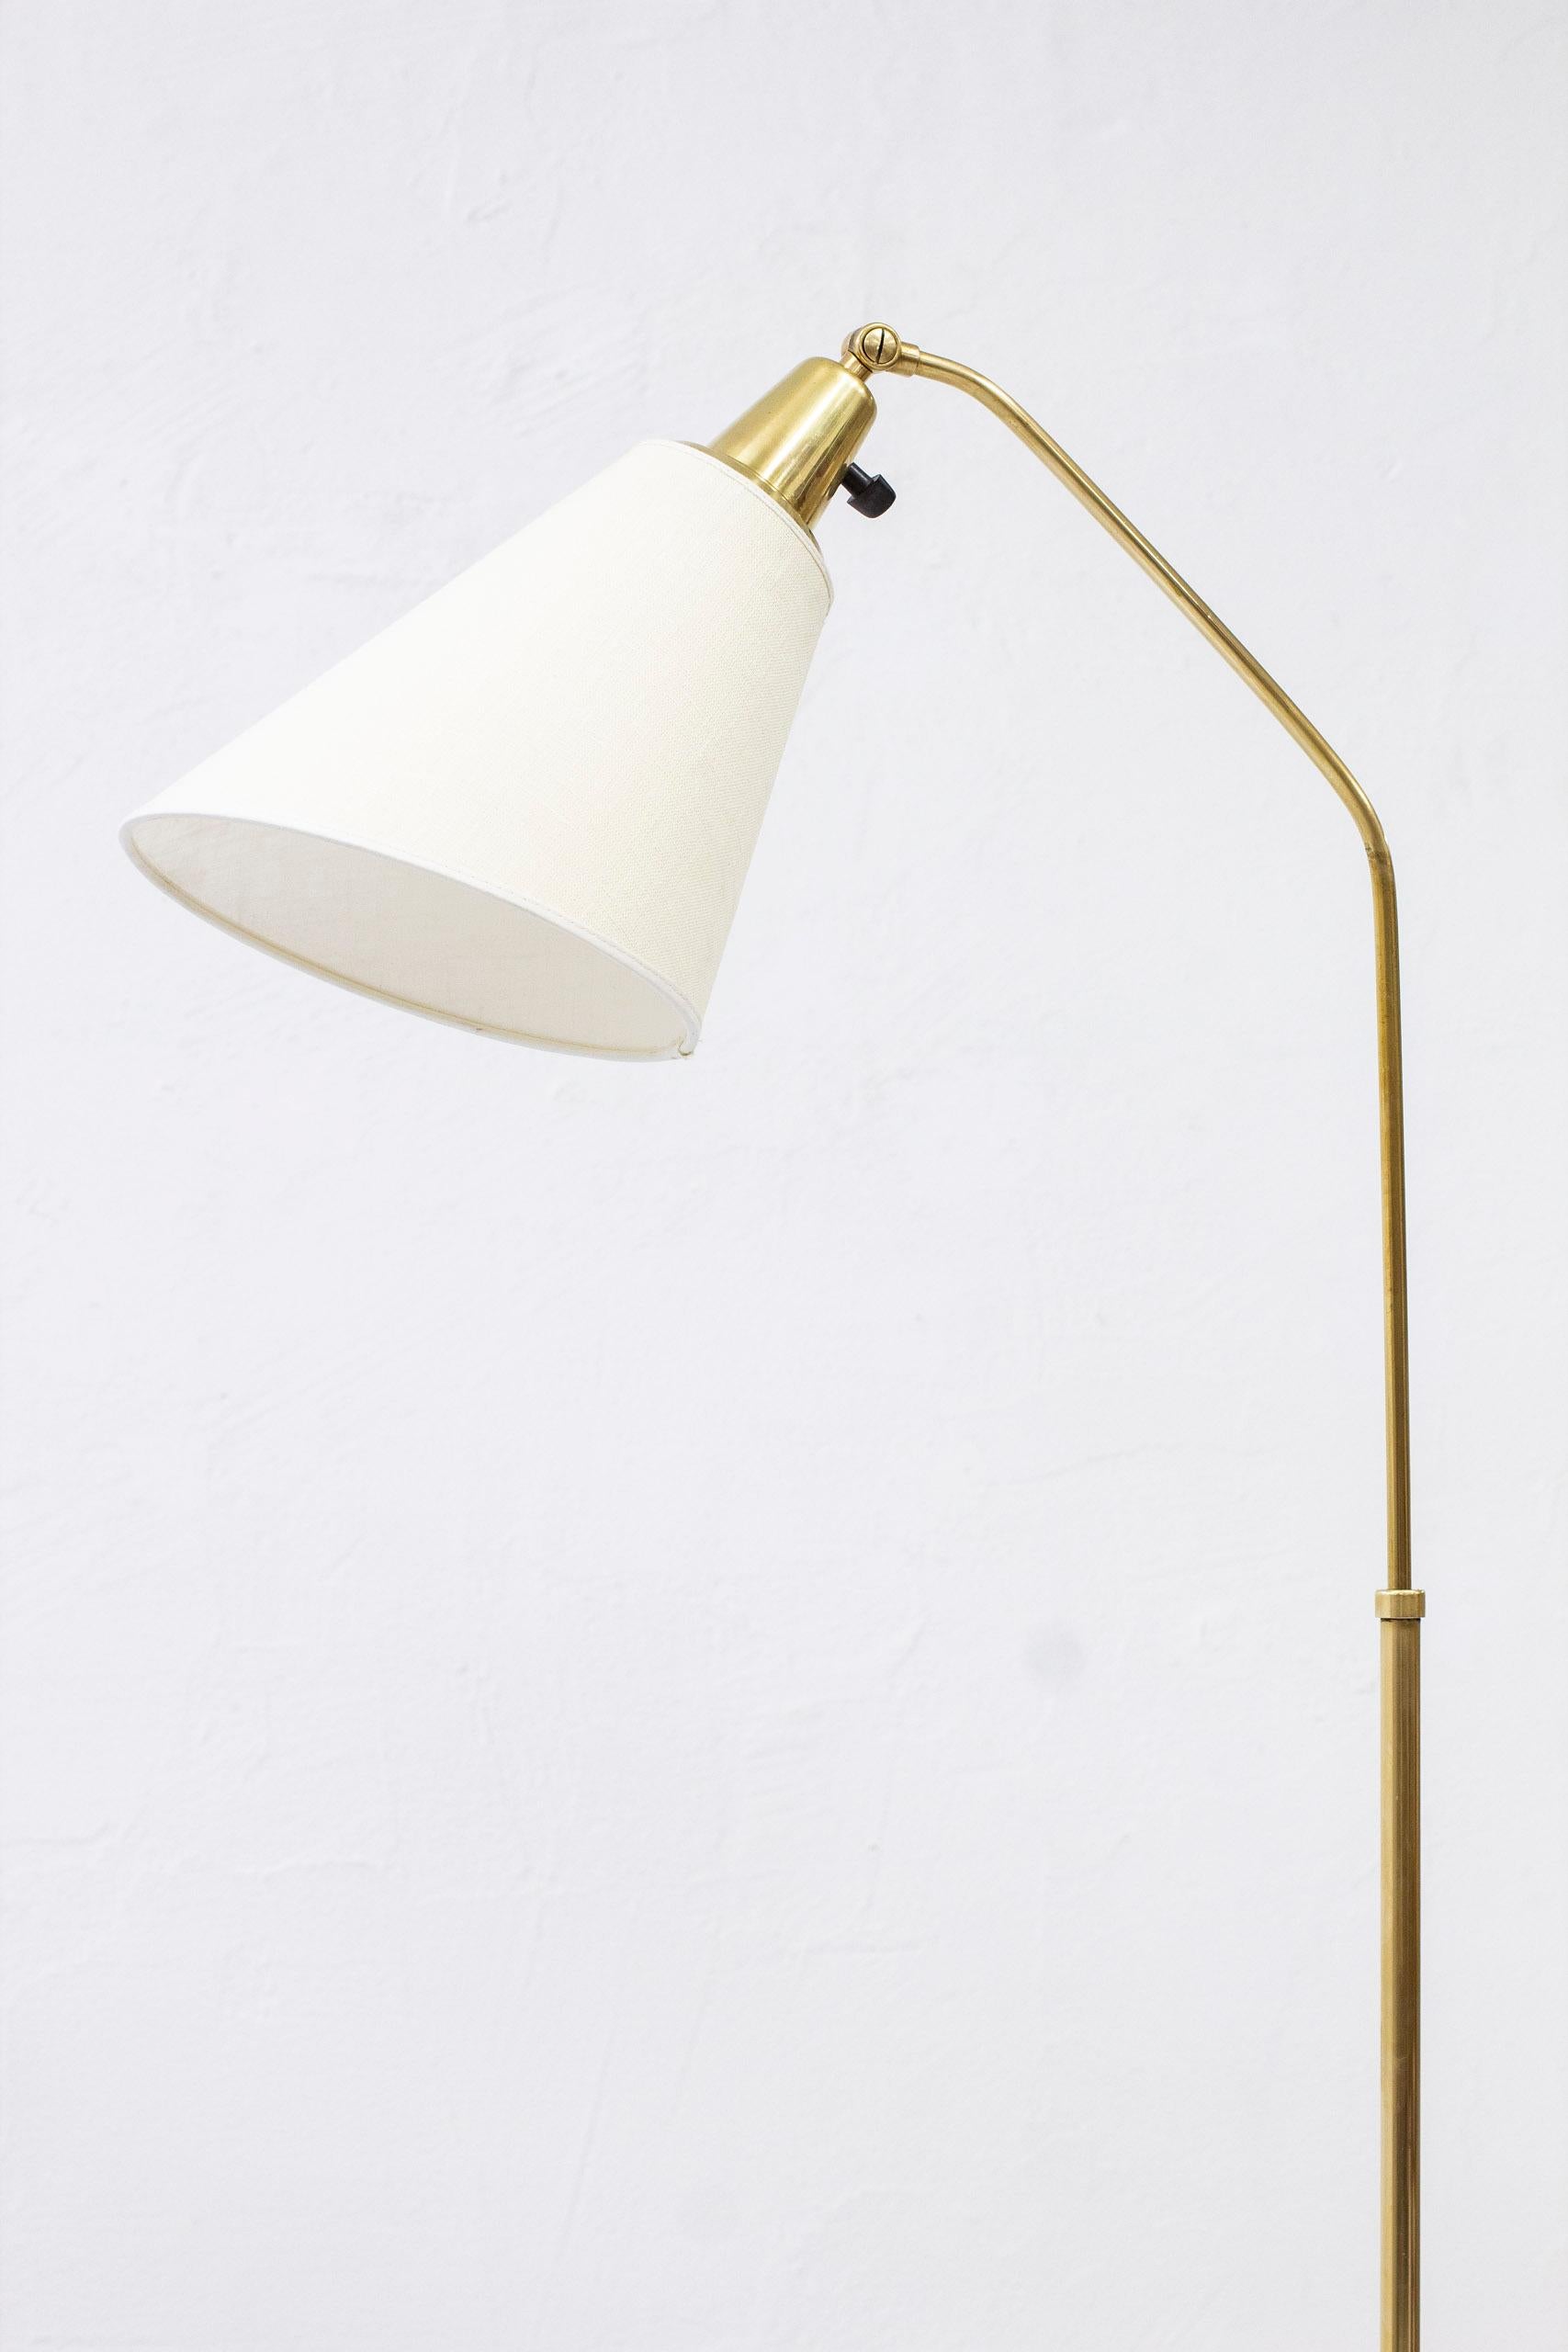 Mid-20th Century Brass Floor Lamp by Alf Svensson for Bergboms, Sweden, 1940s